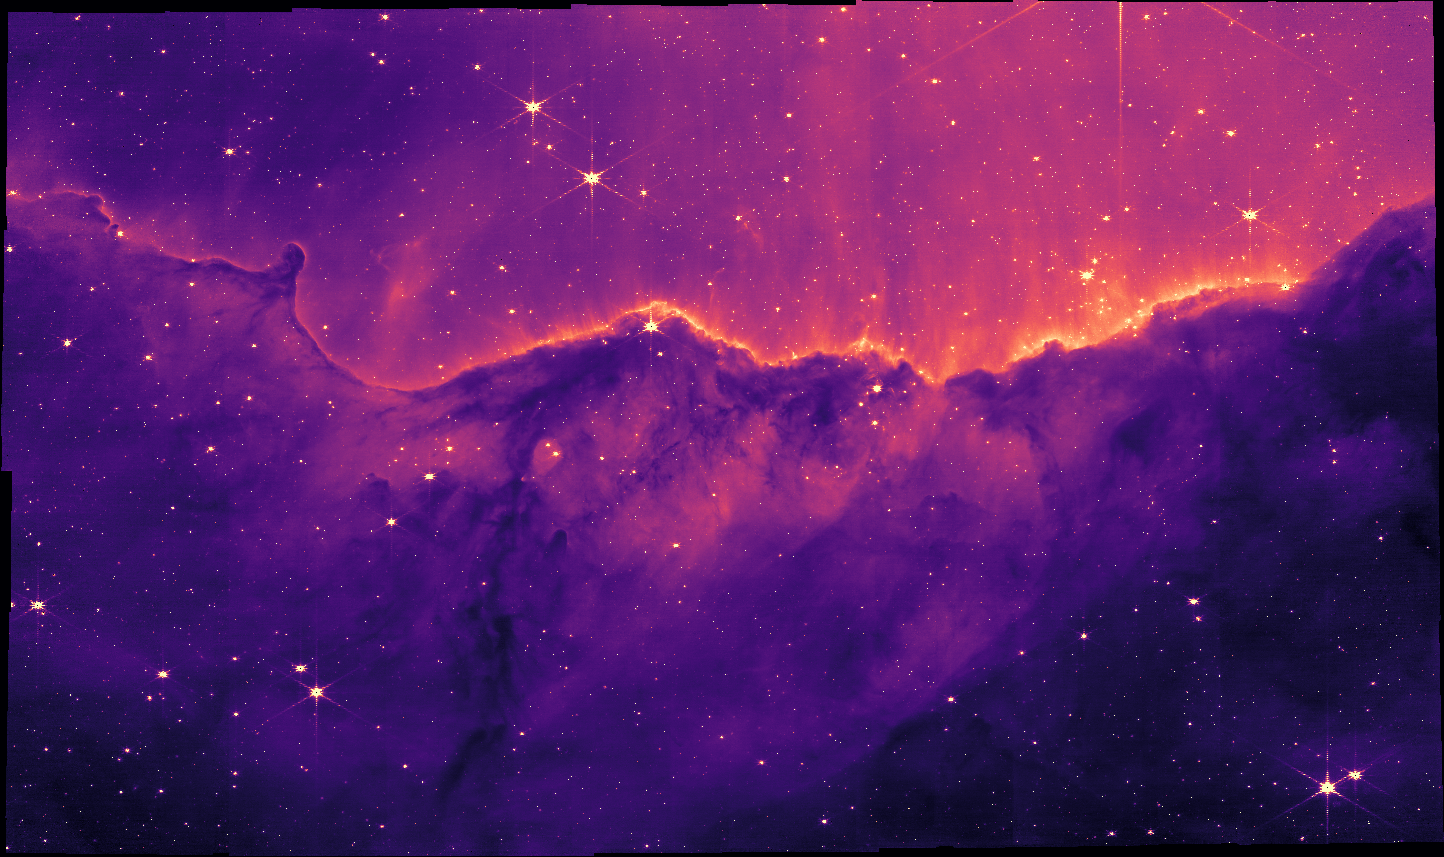 Carina nebula displayed as an image